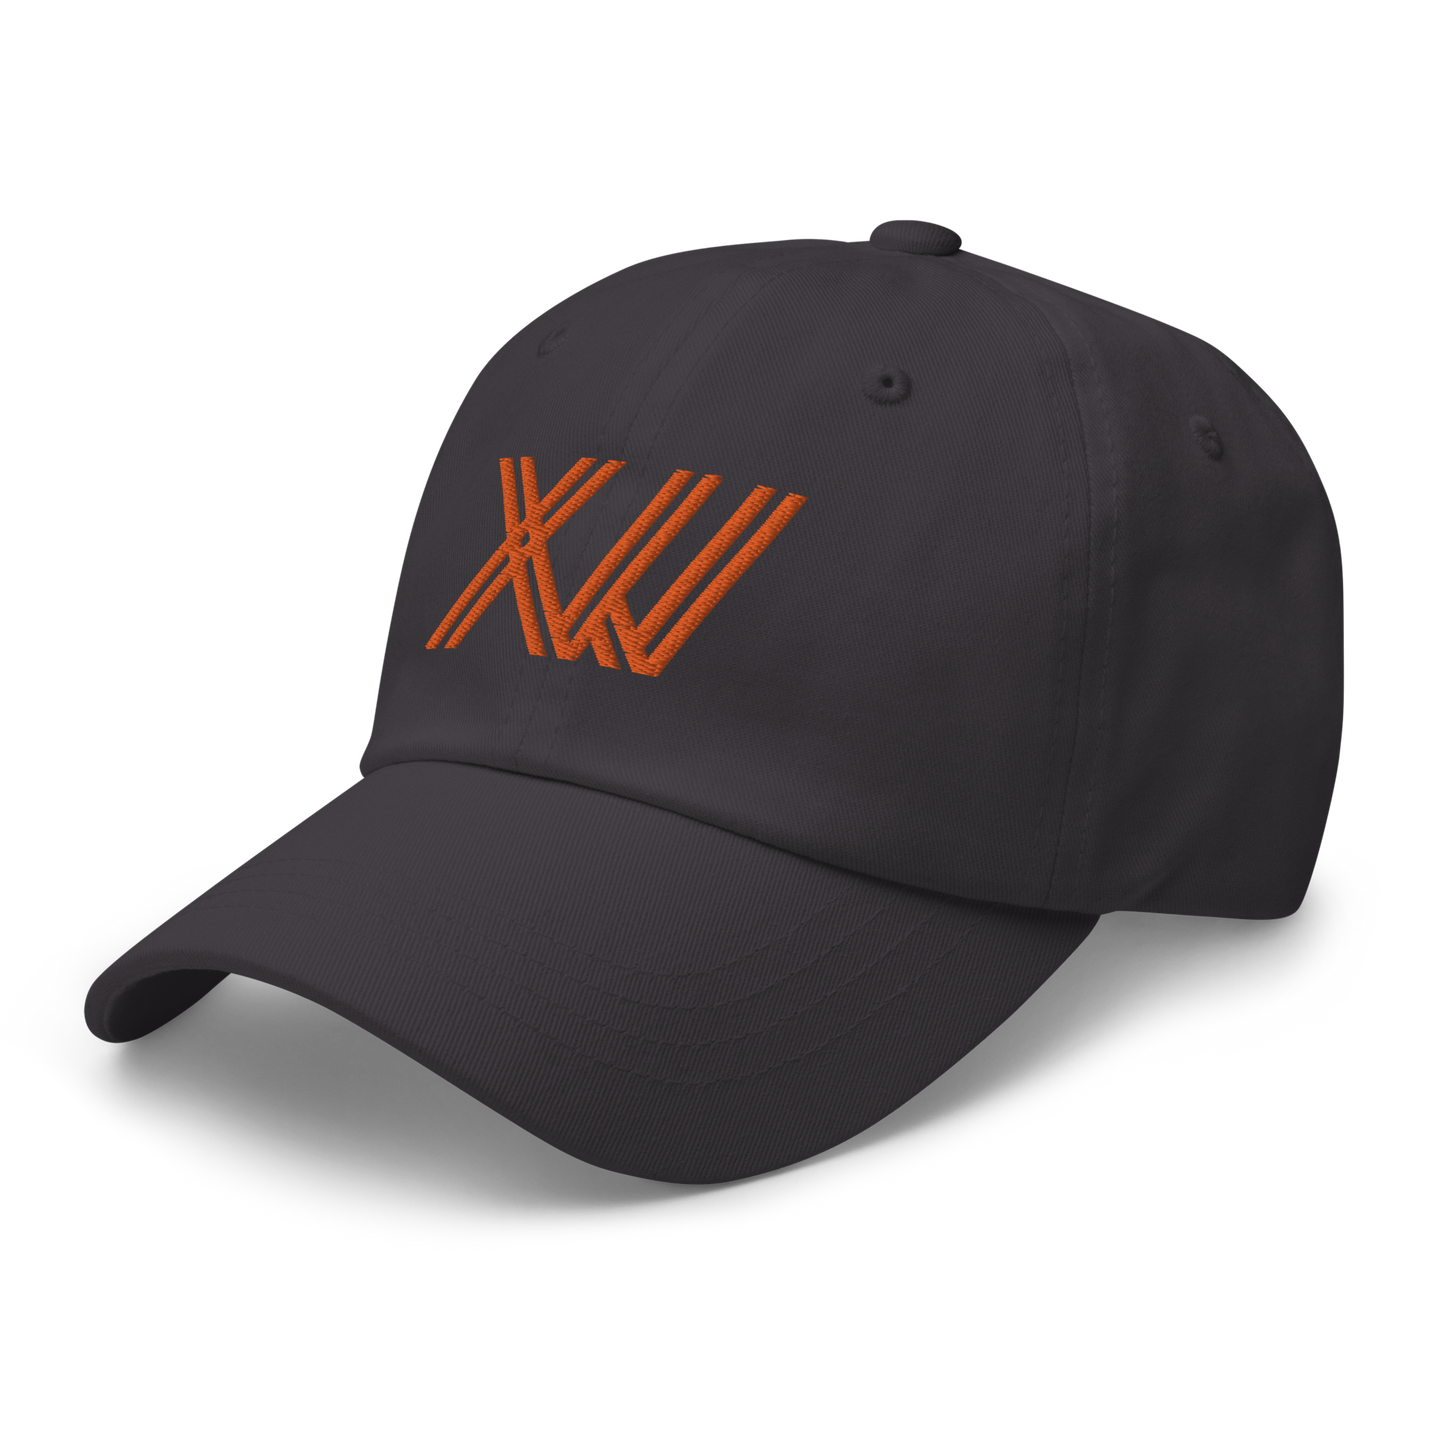 XAVIER WARD PERFORMANCE CAP